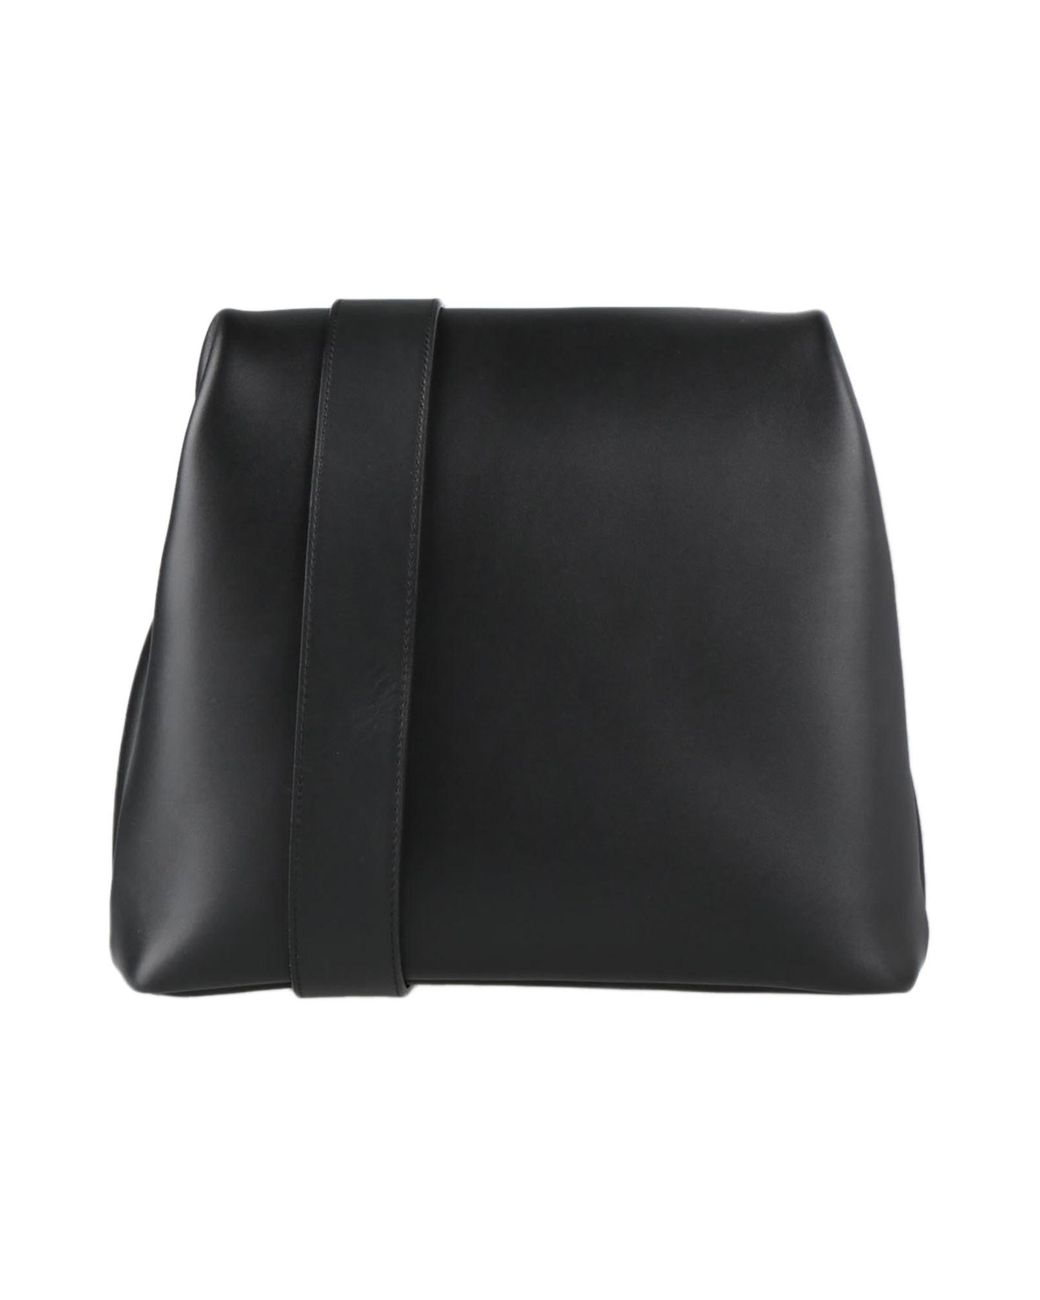 OSOI Cross-body Bag in Black | Lyst